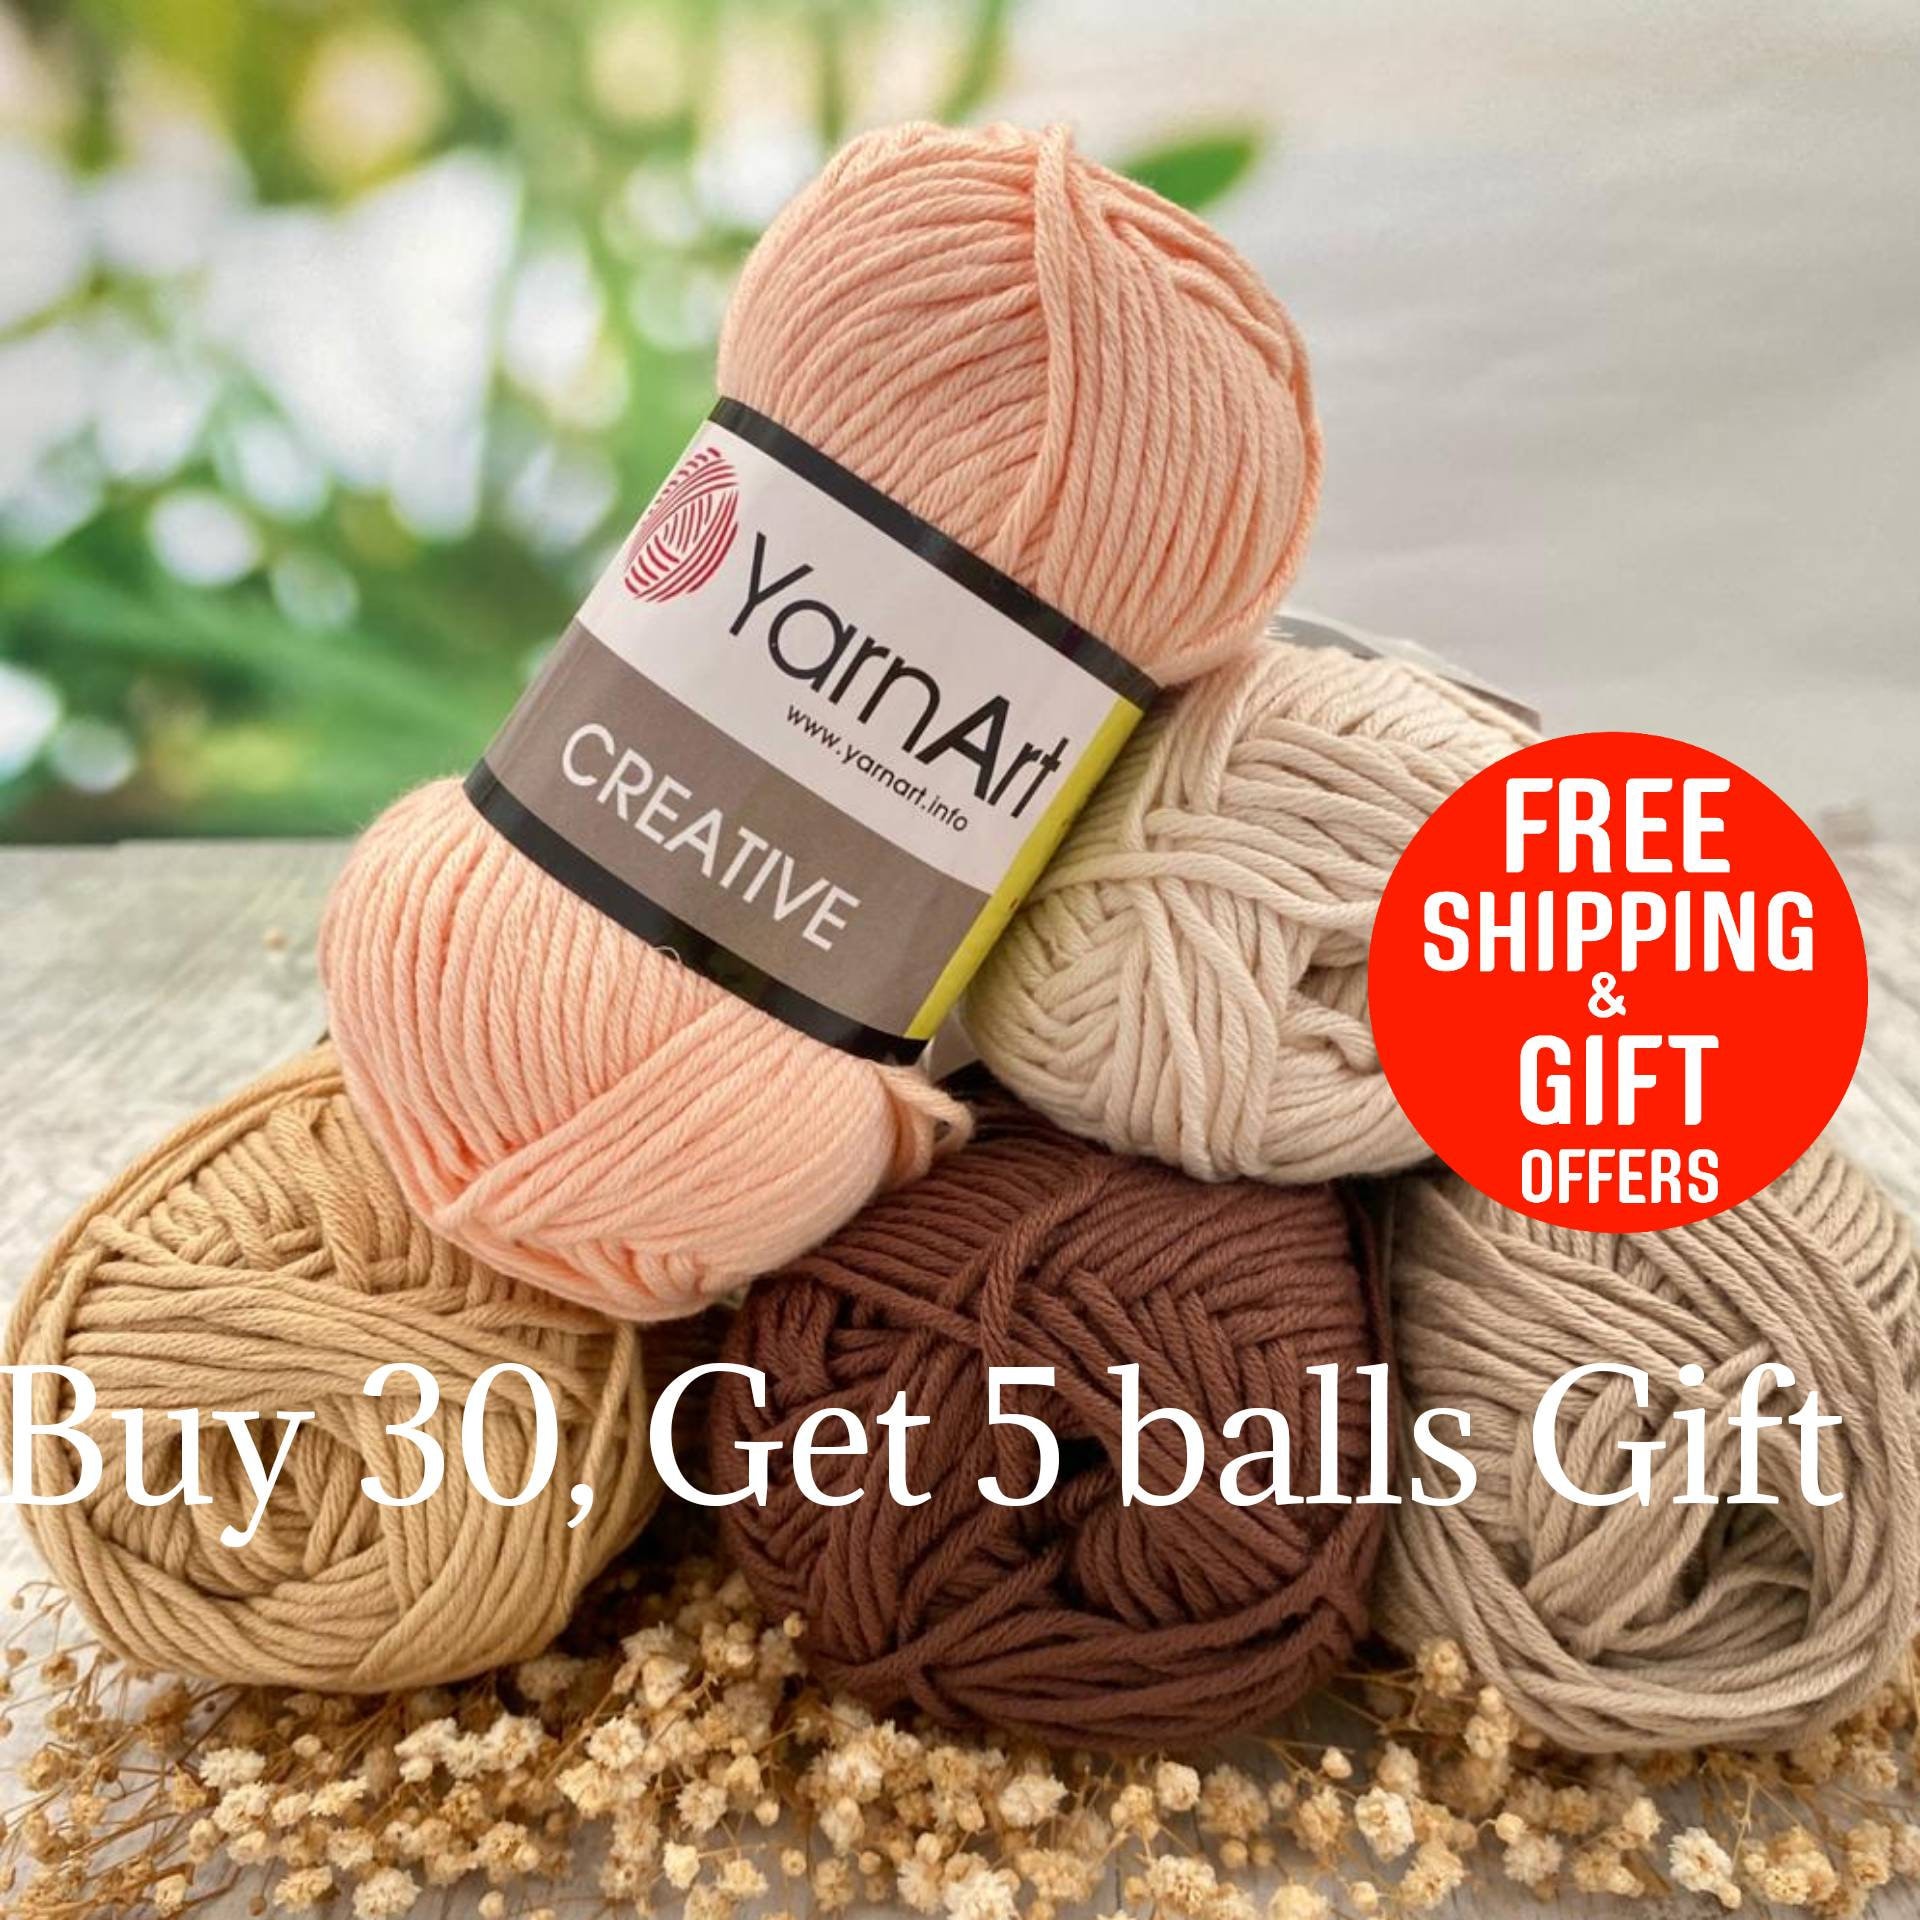 1 Ball Baby Yarn For Knitting And Crocheting, Pure Soft Milk Yarn